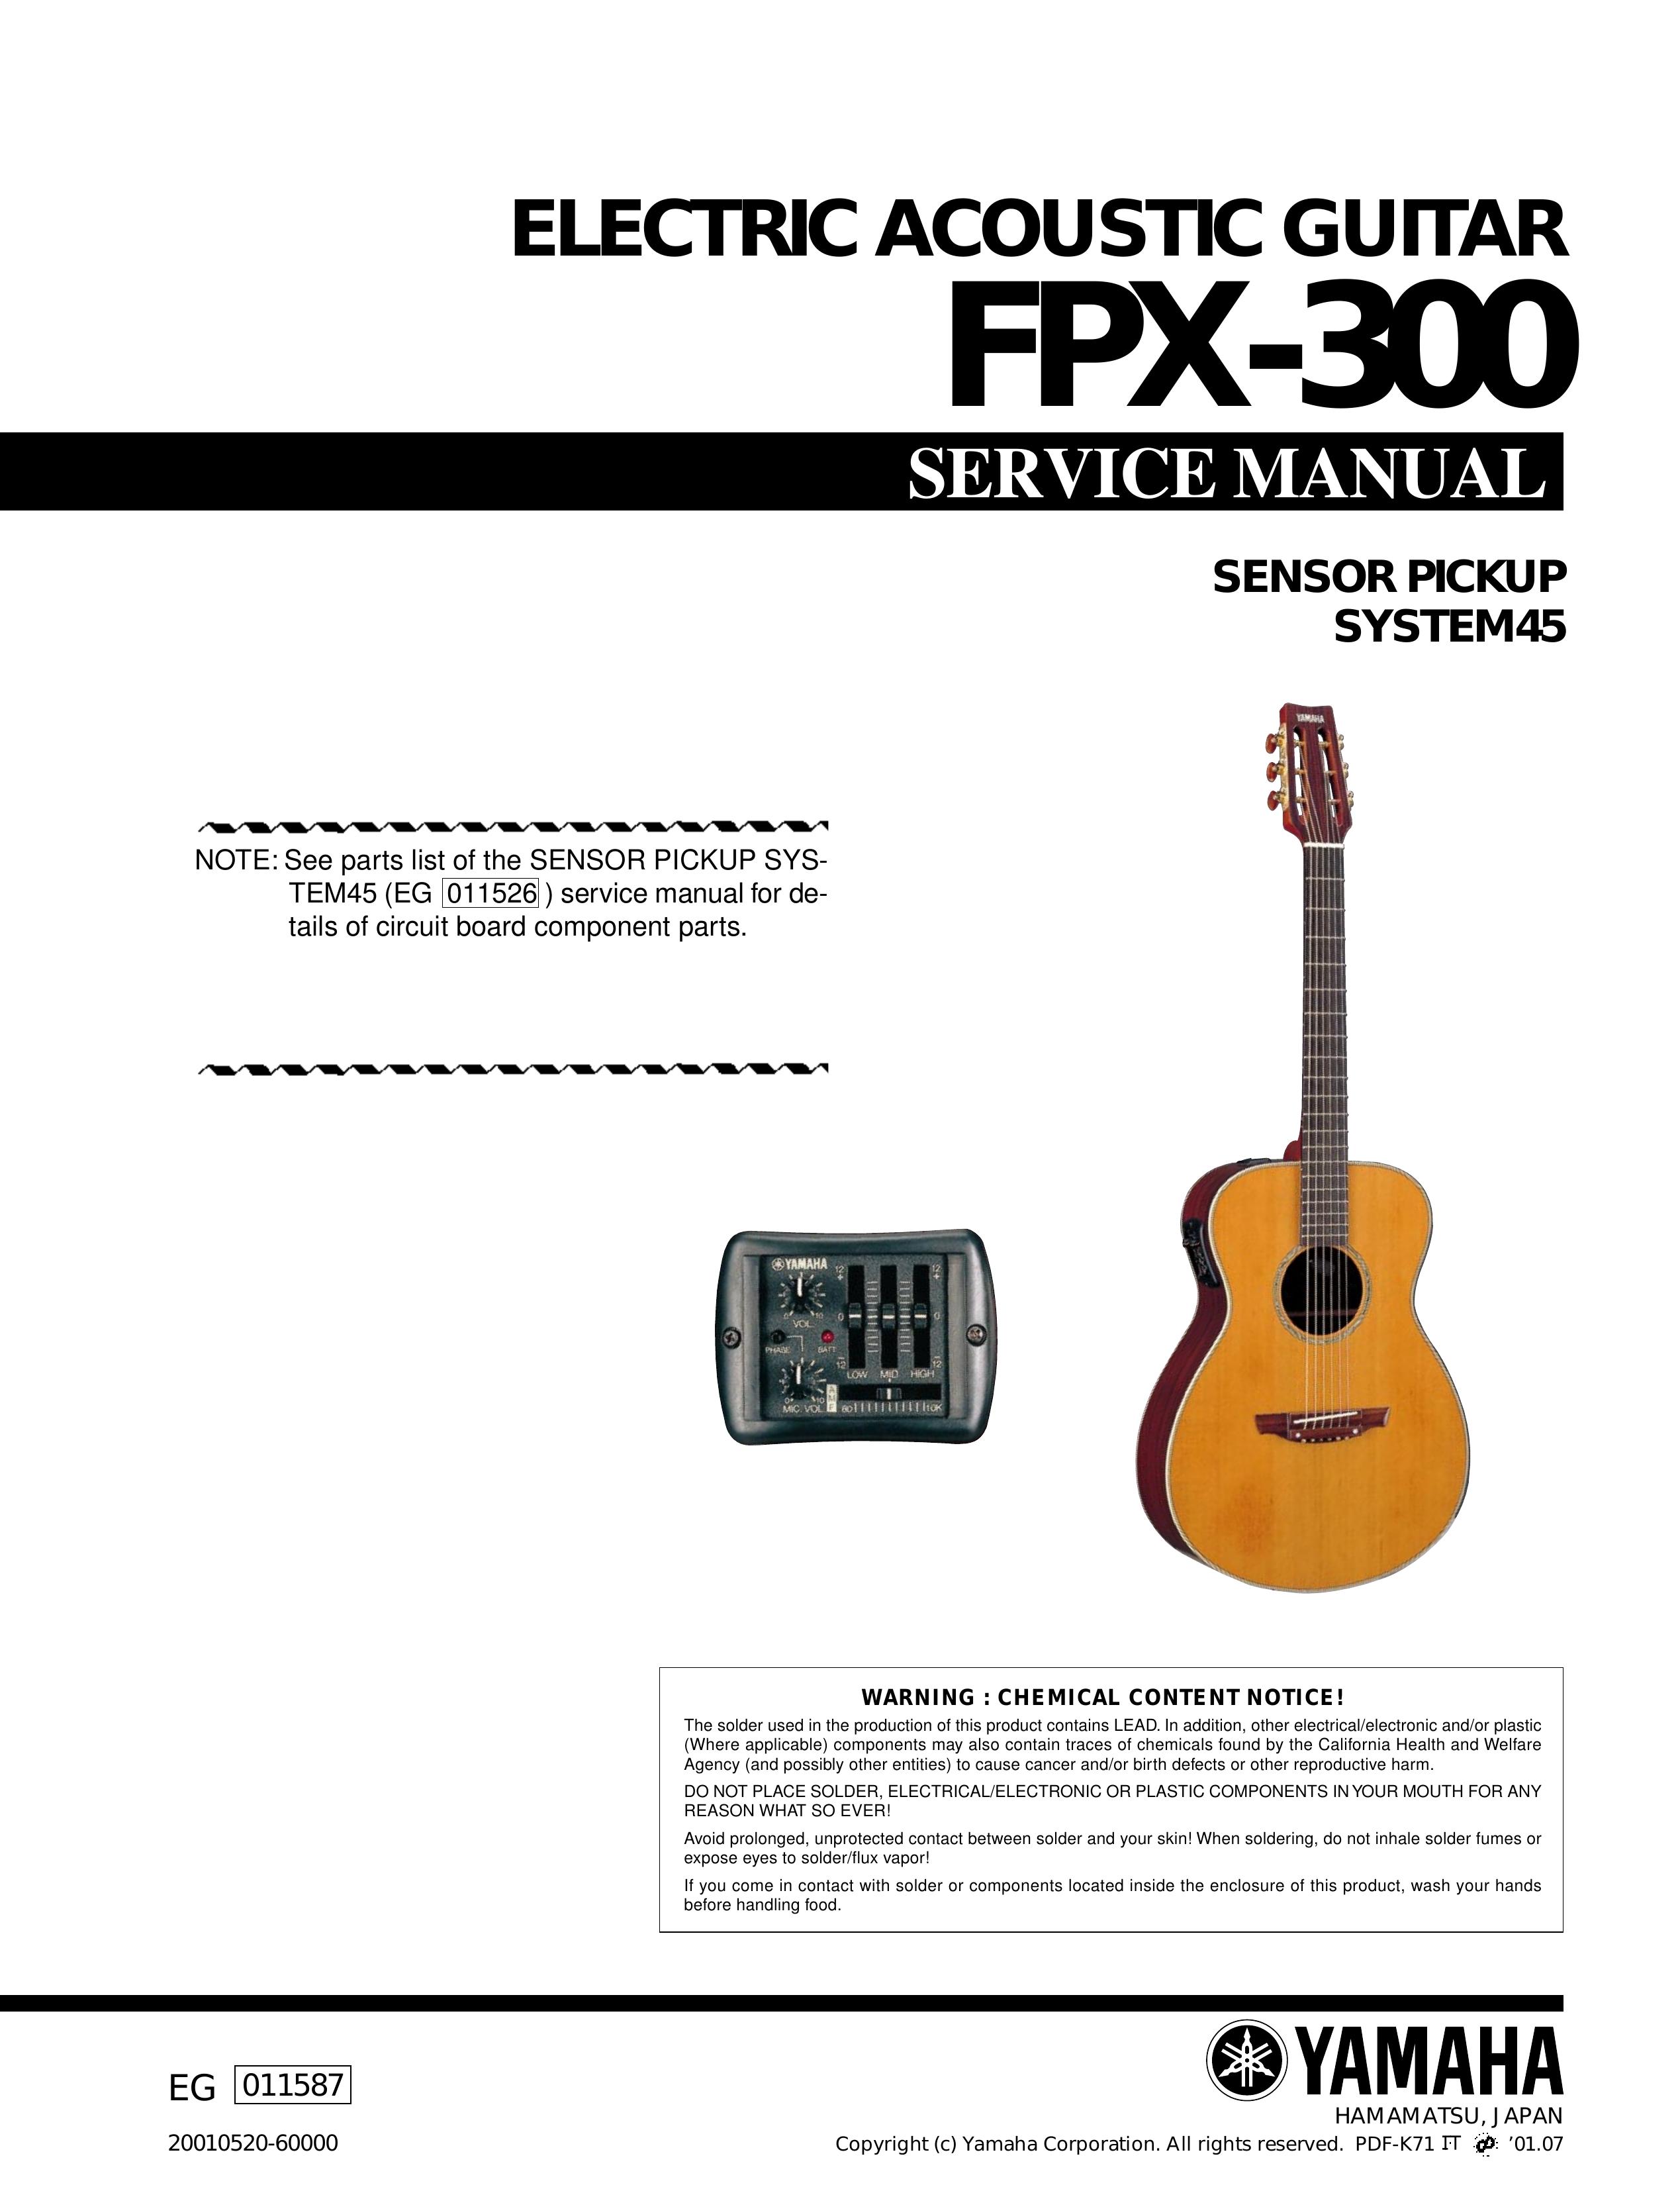 Yamaha Electric Acoustic Guitar Guitar User Manual